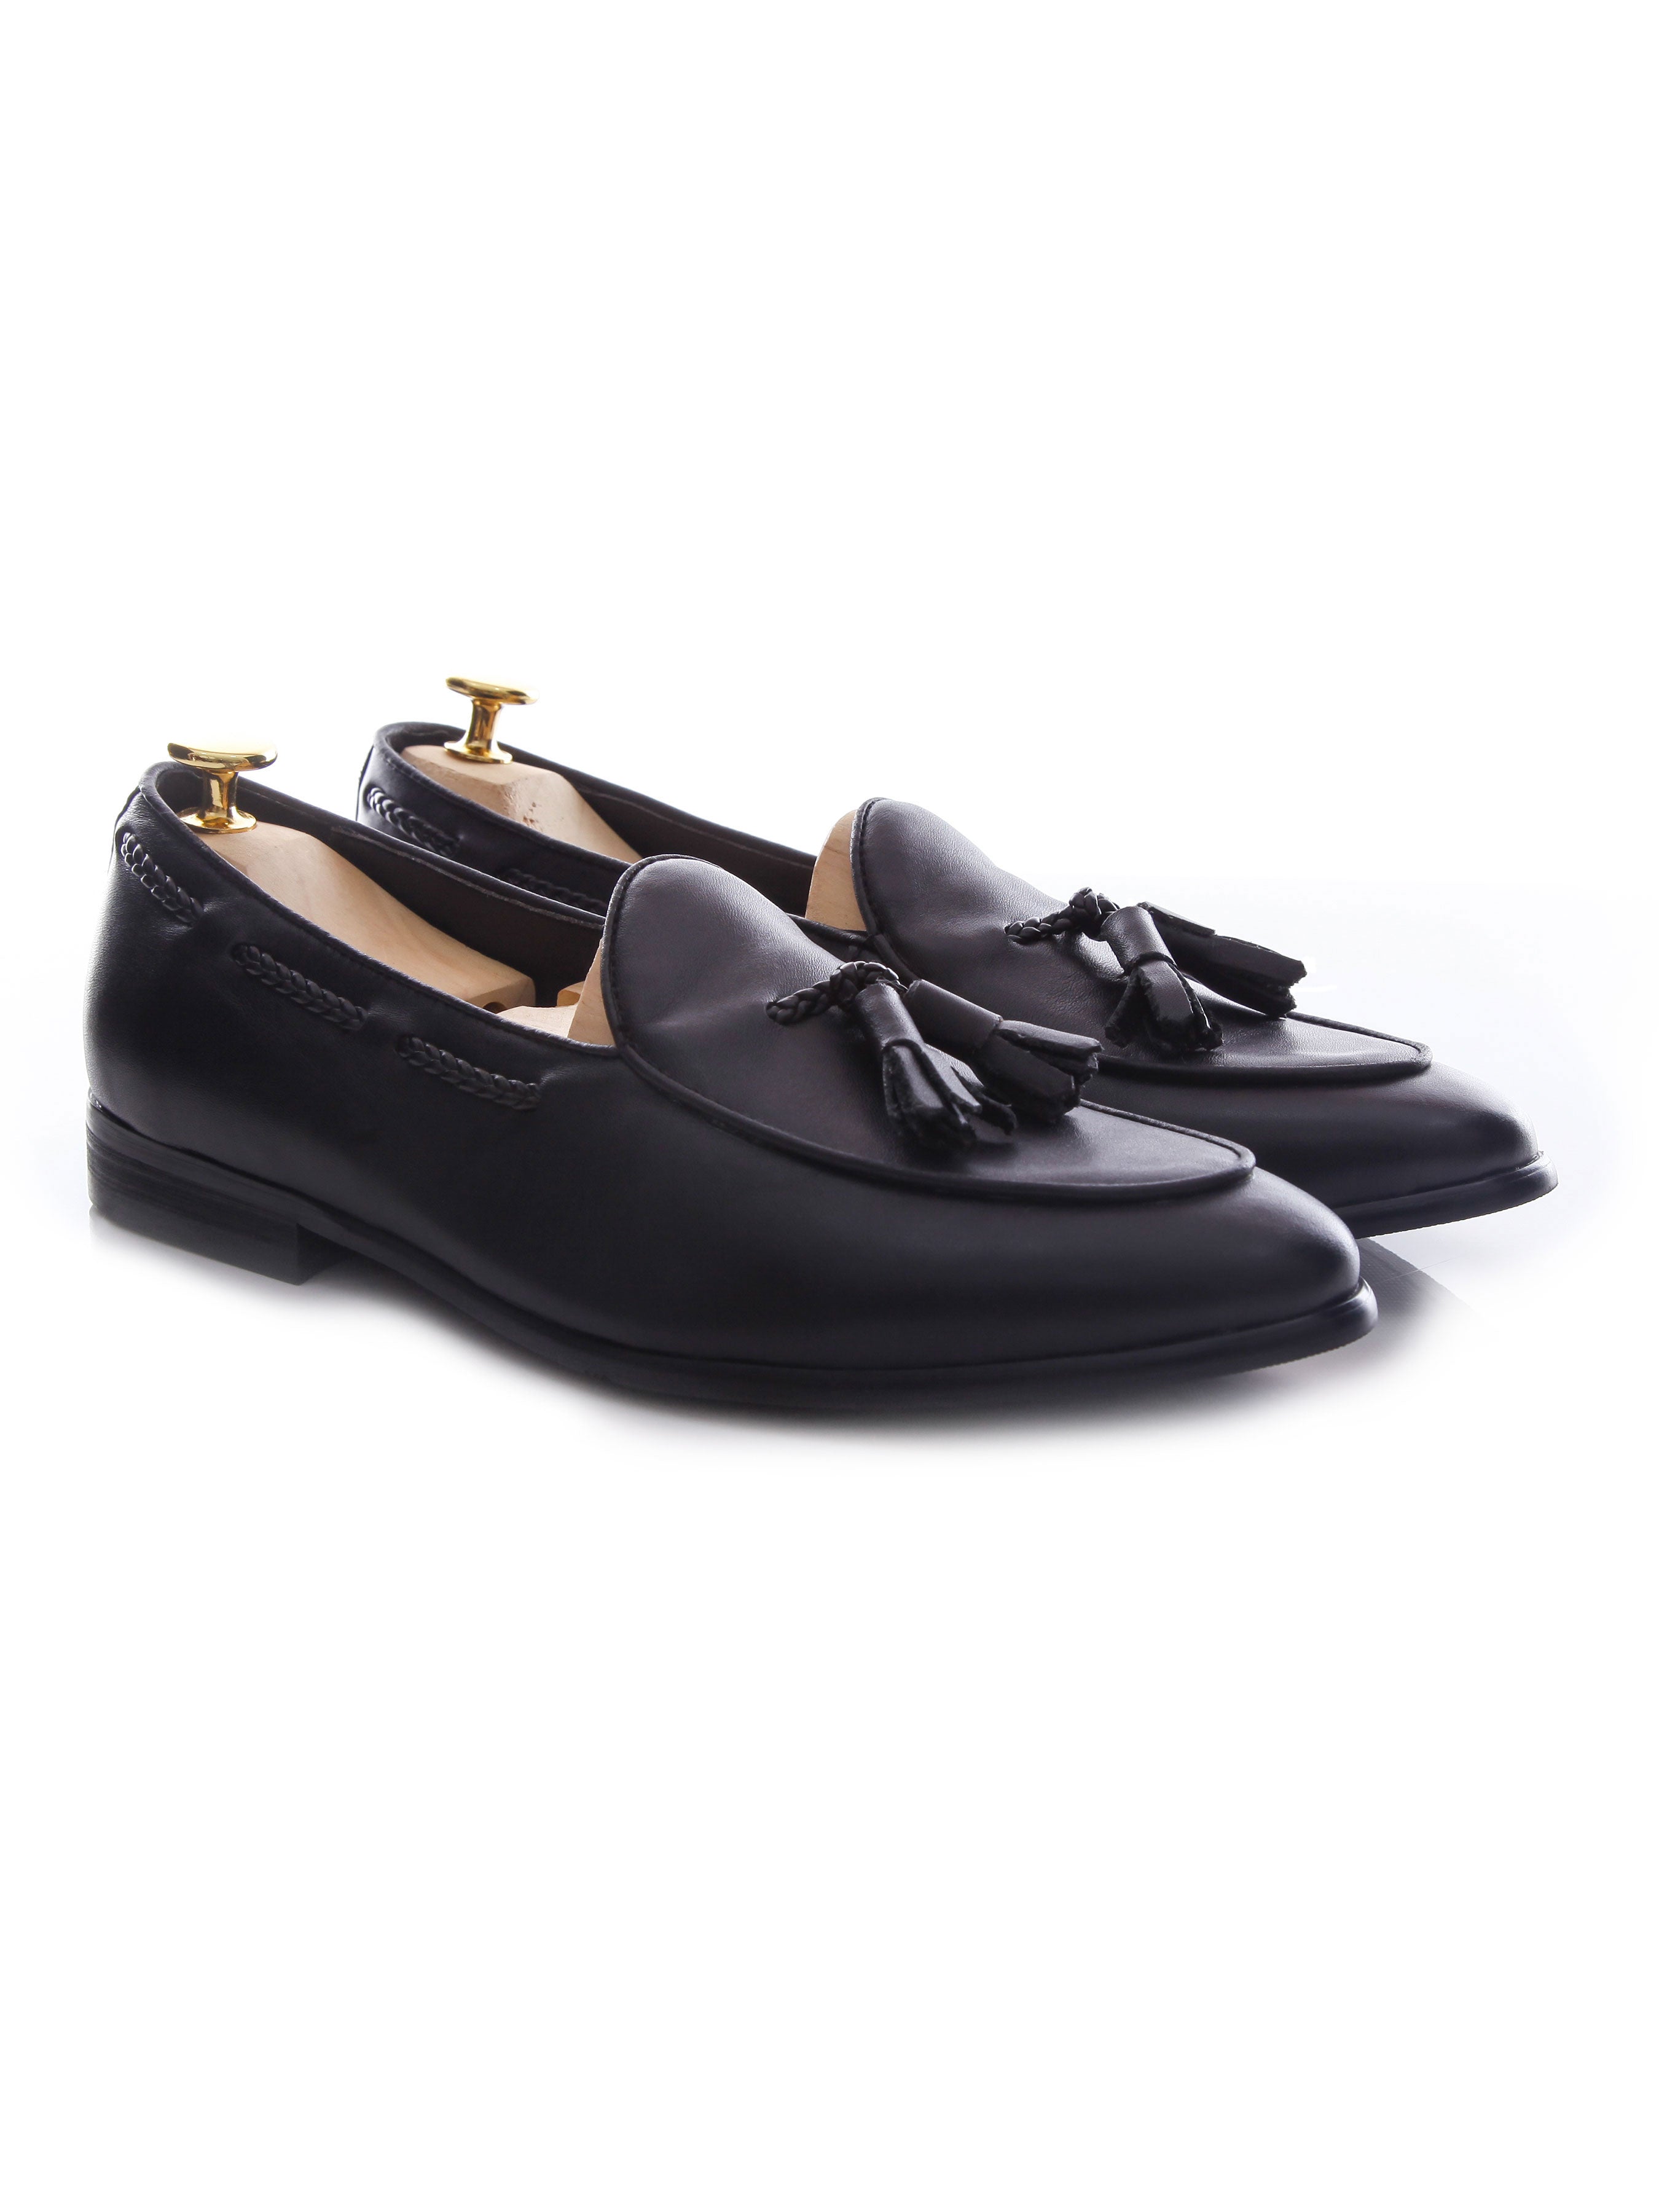 Belgian Loafer With Tassel - Black Leather - Zeve Shoes